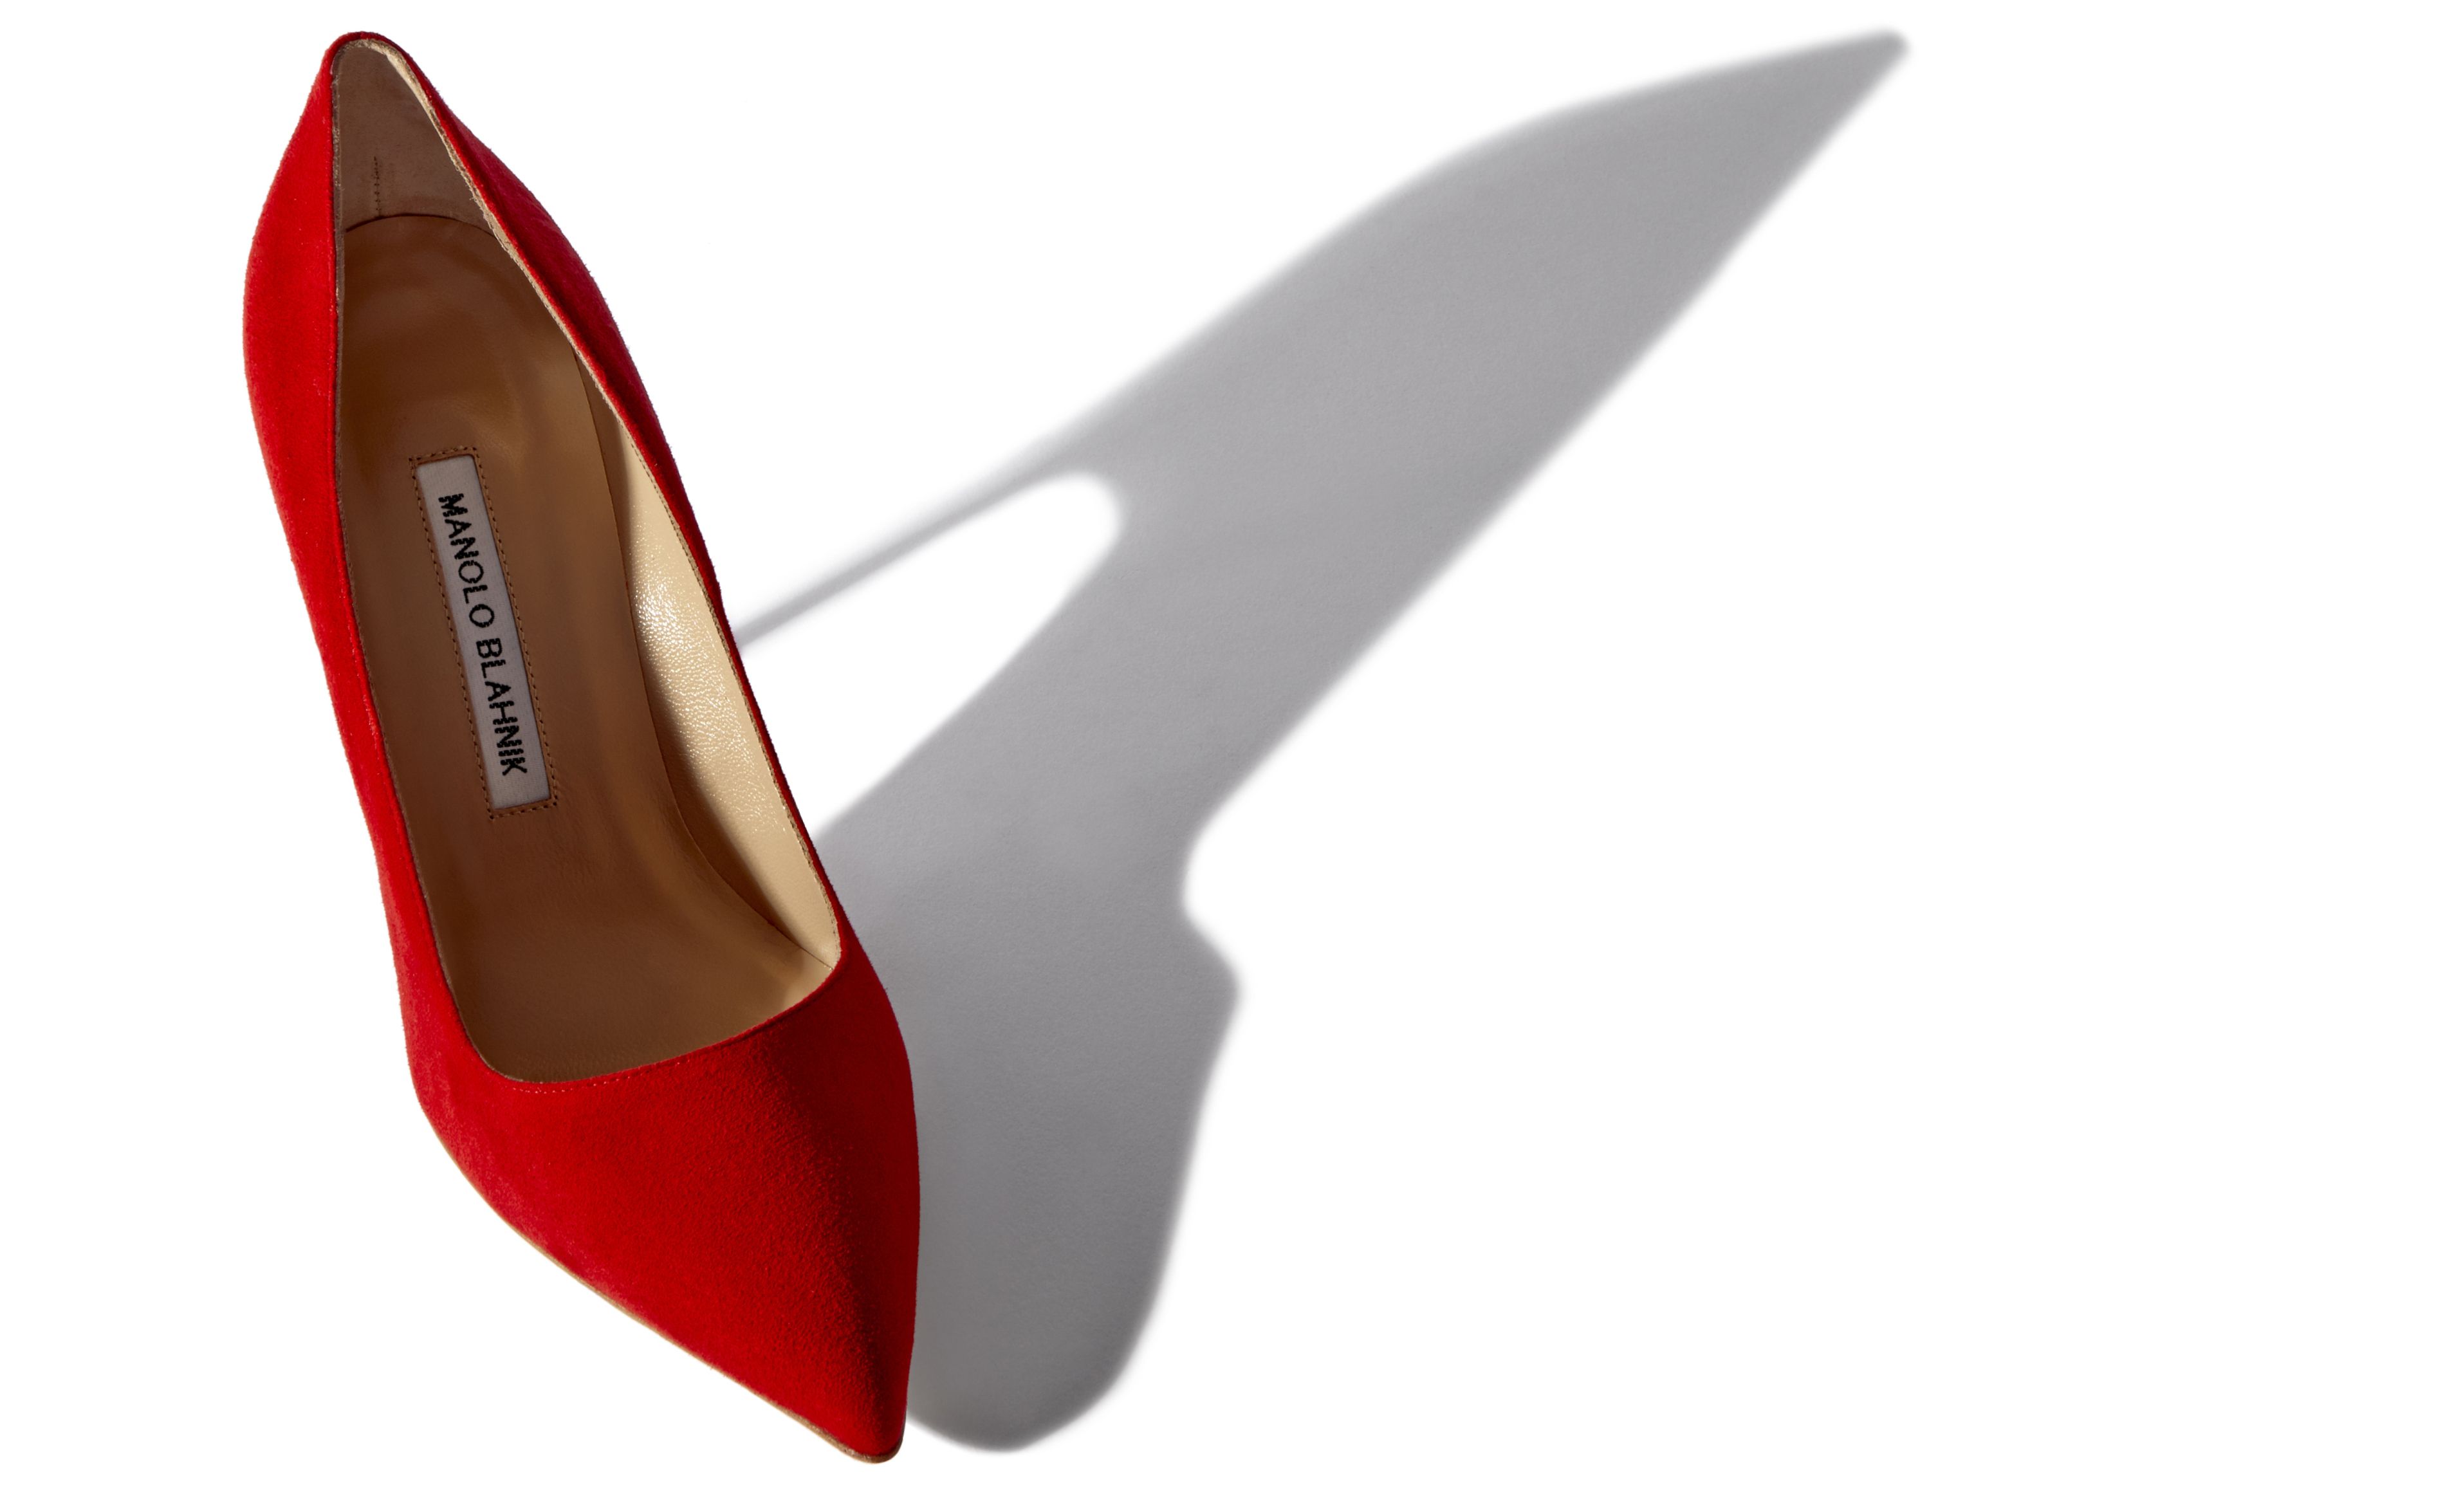 Manolo Blahnik Bb Red Suede Pointed Toe Pumps - Size 36.5 - Women's Designer Pumps